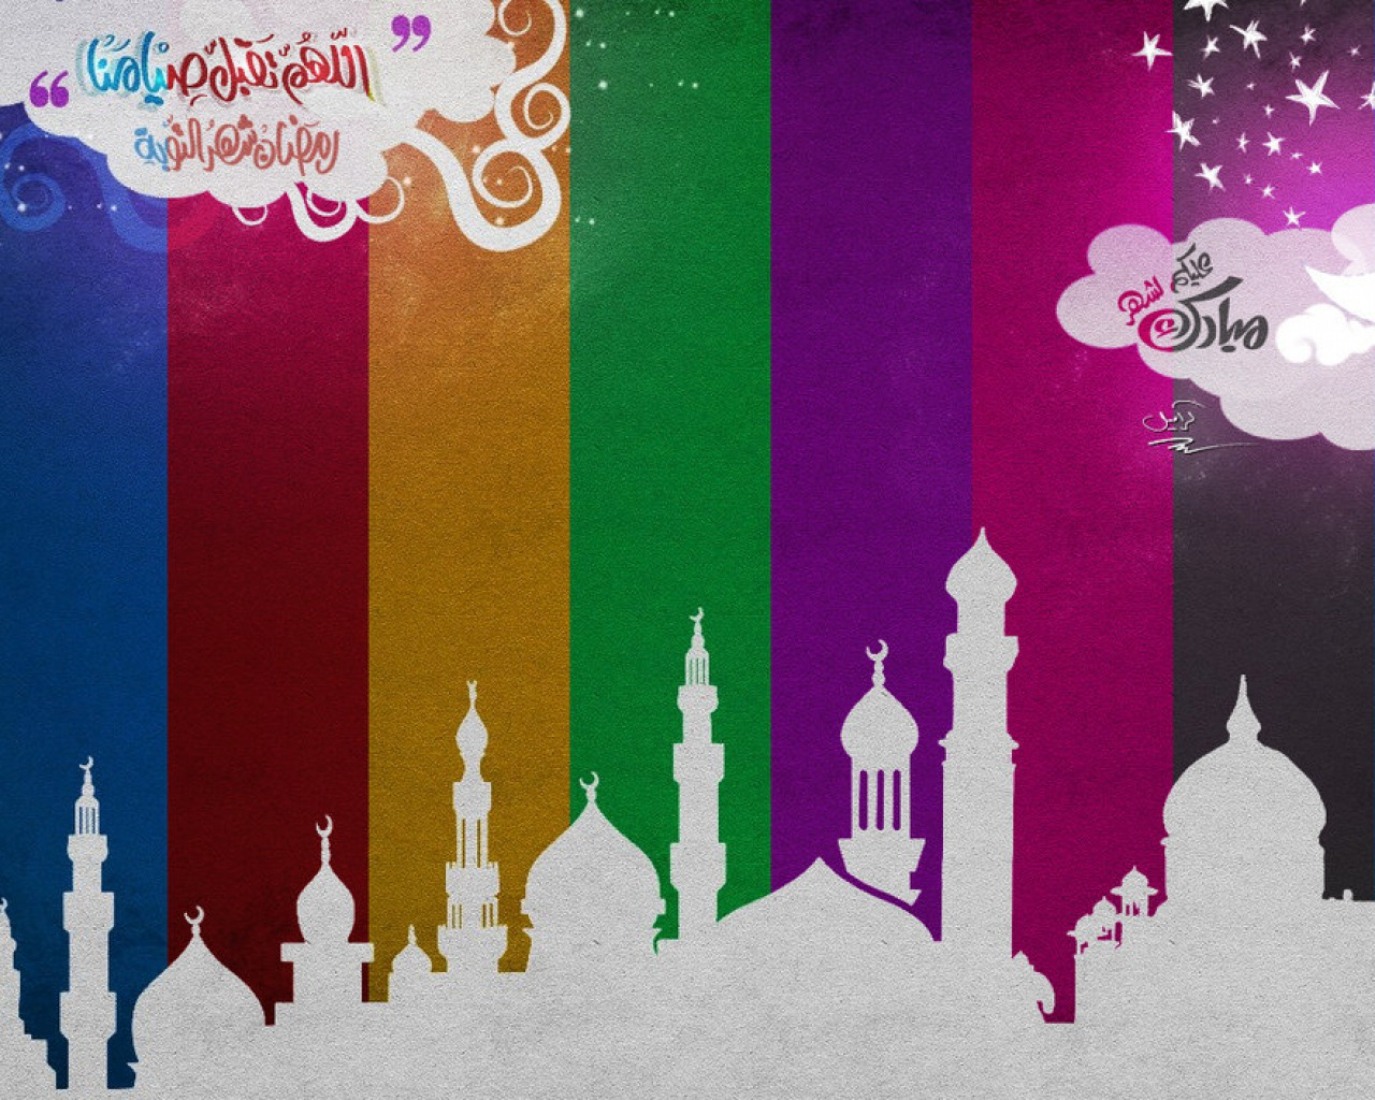 Wallpaper Spesial Ramadhan